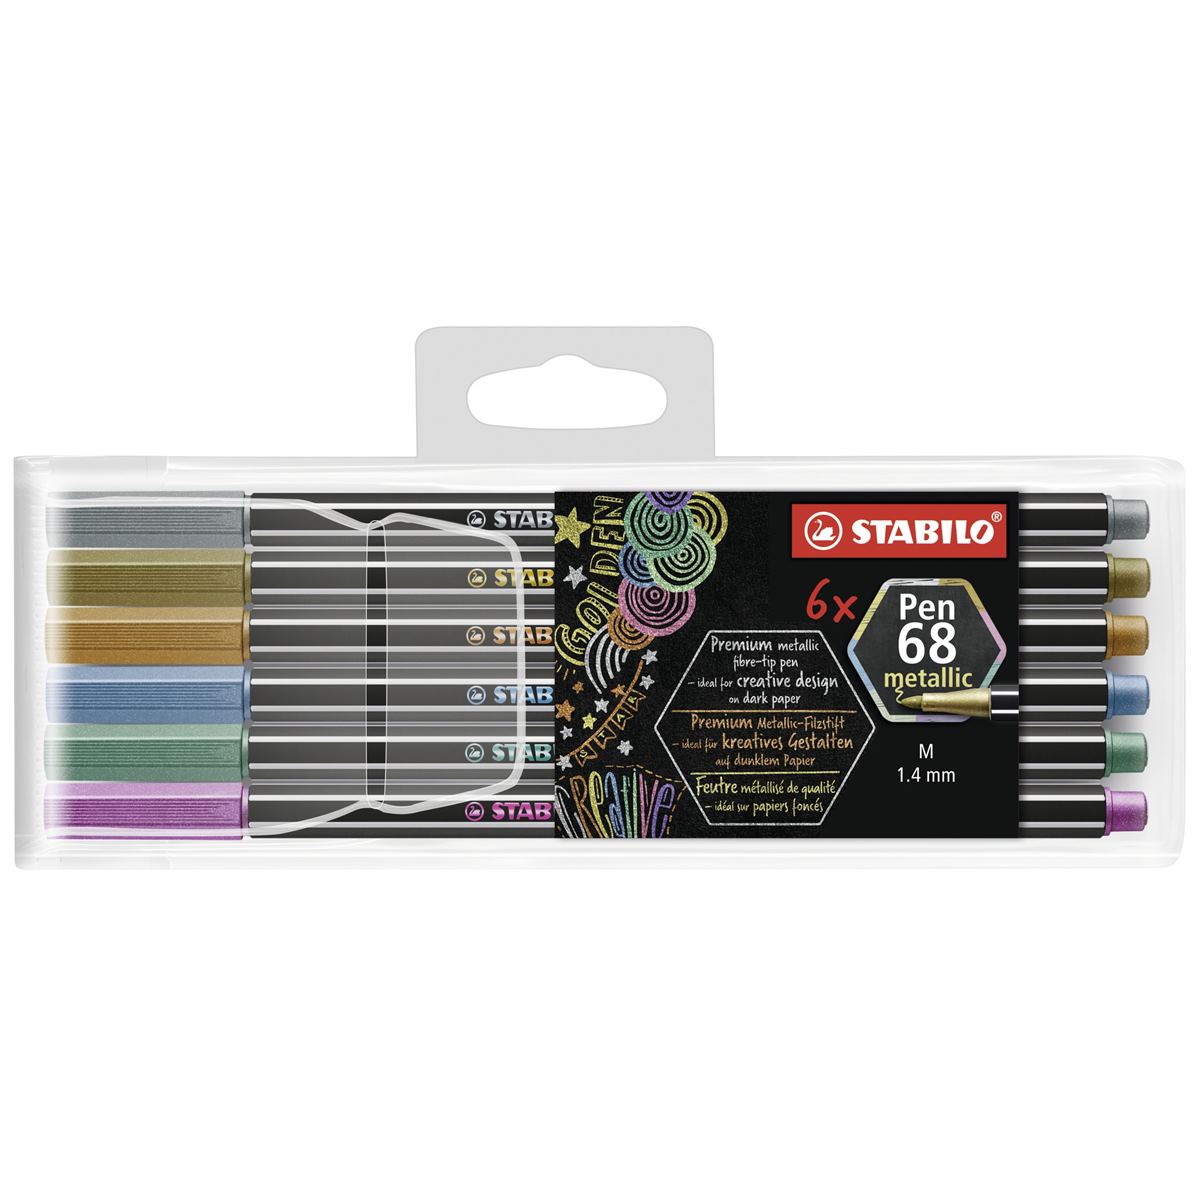 STABILO Pen 68 Metallic - Pack of 6 Felt Tips